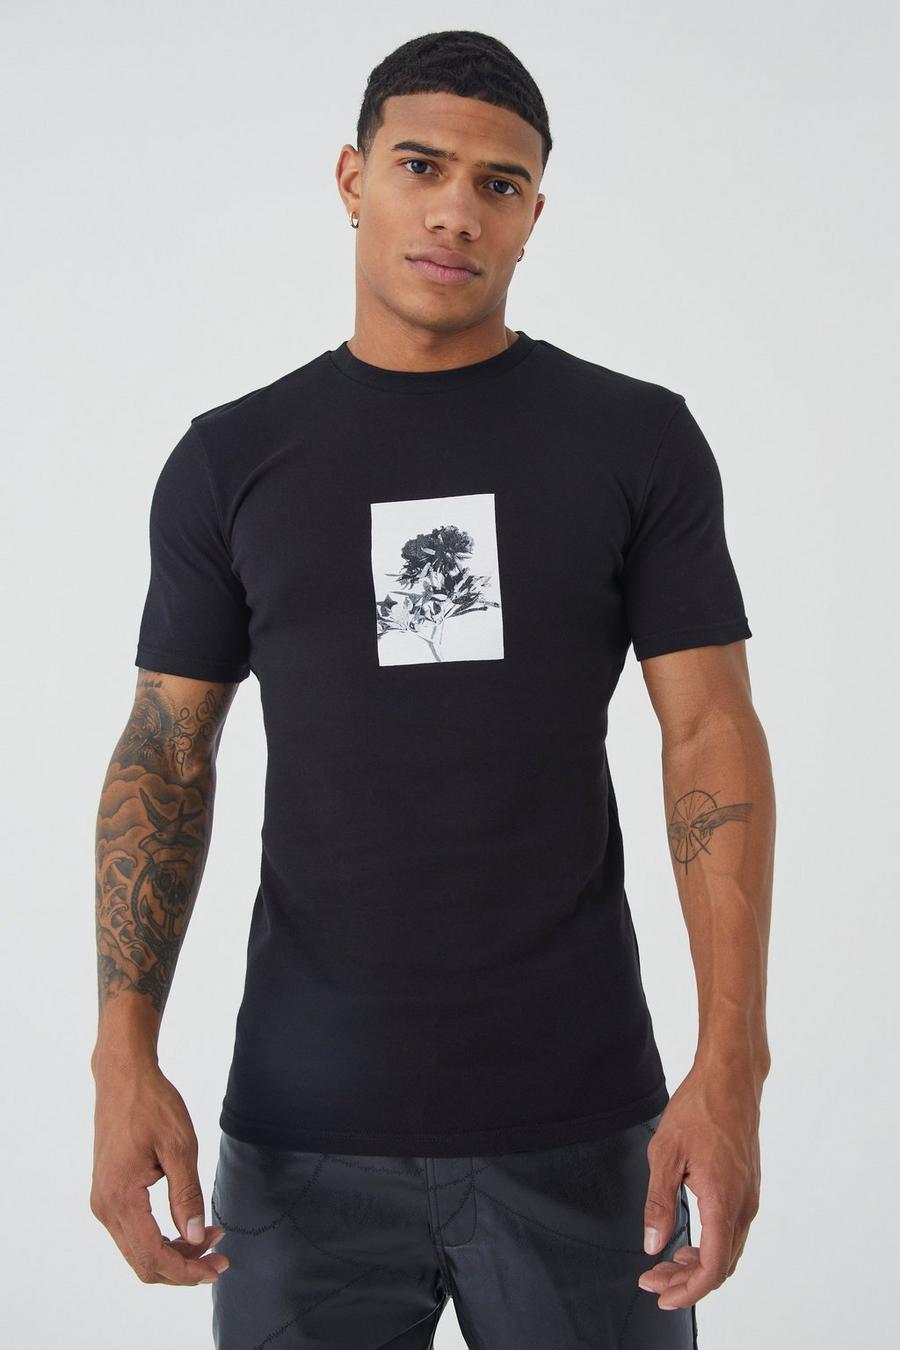 Black Muscle Heavyweight Interlock Rose Graphic T-shirt